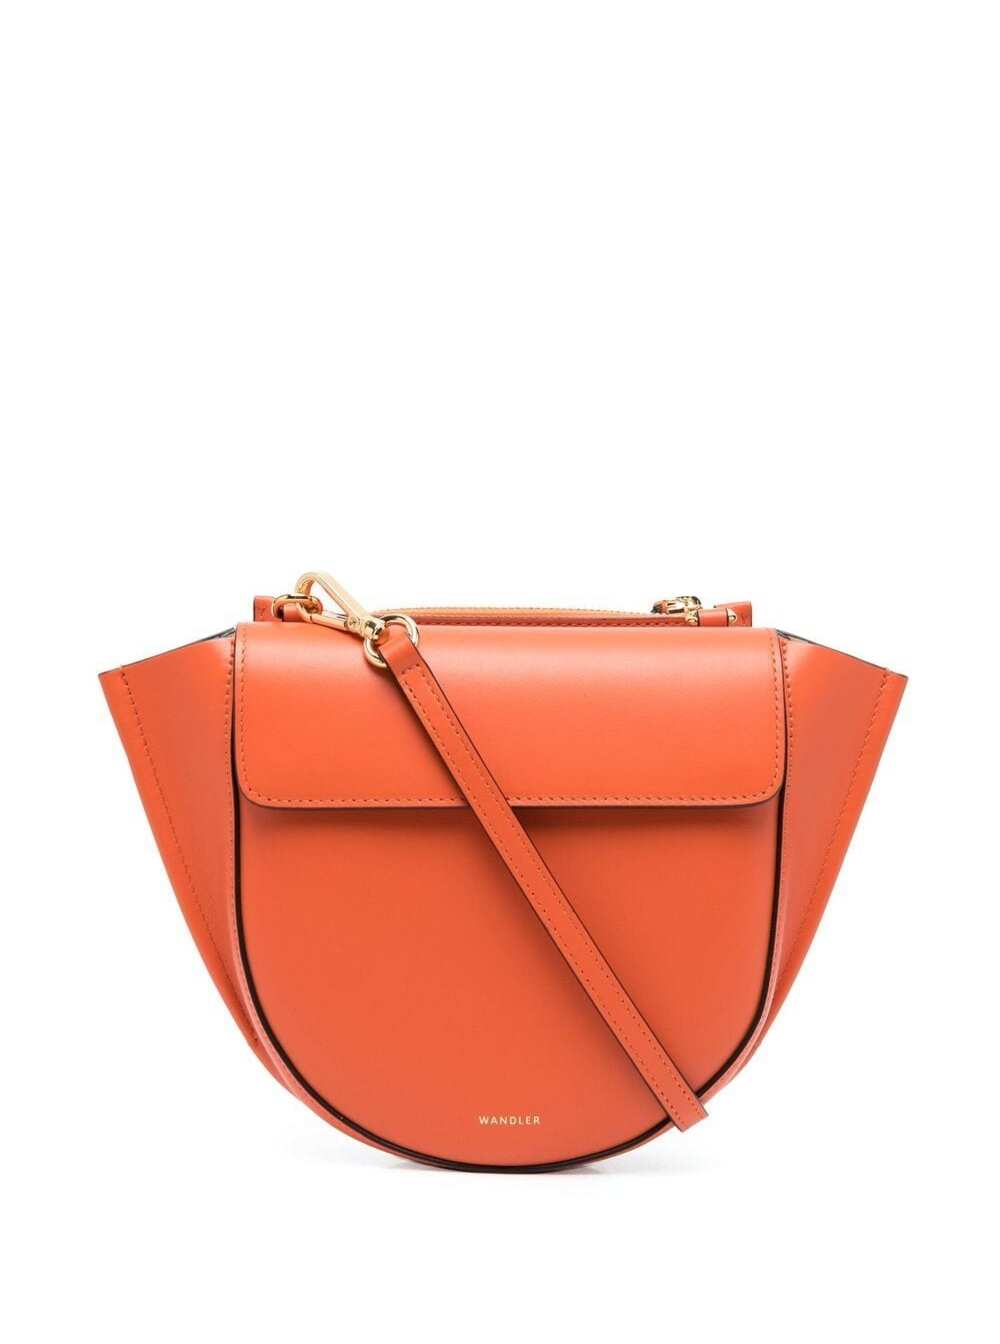 Wandler Hortensia Mini Orange Leather Handbag With Logo Woman